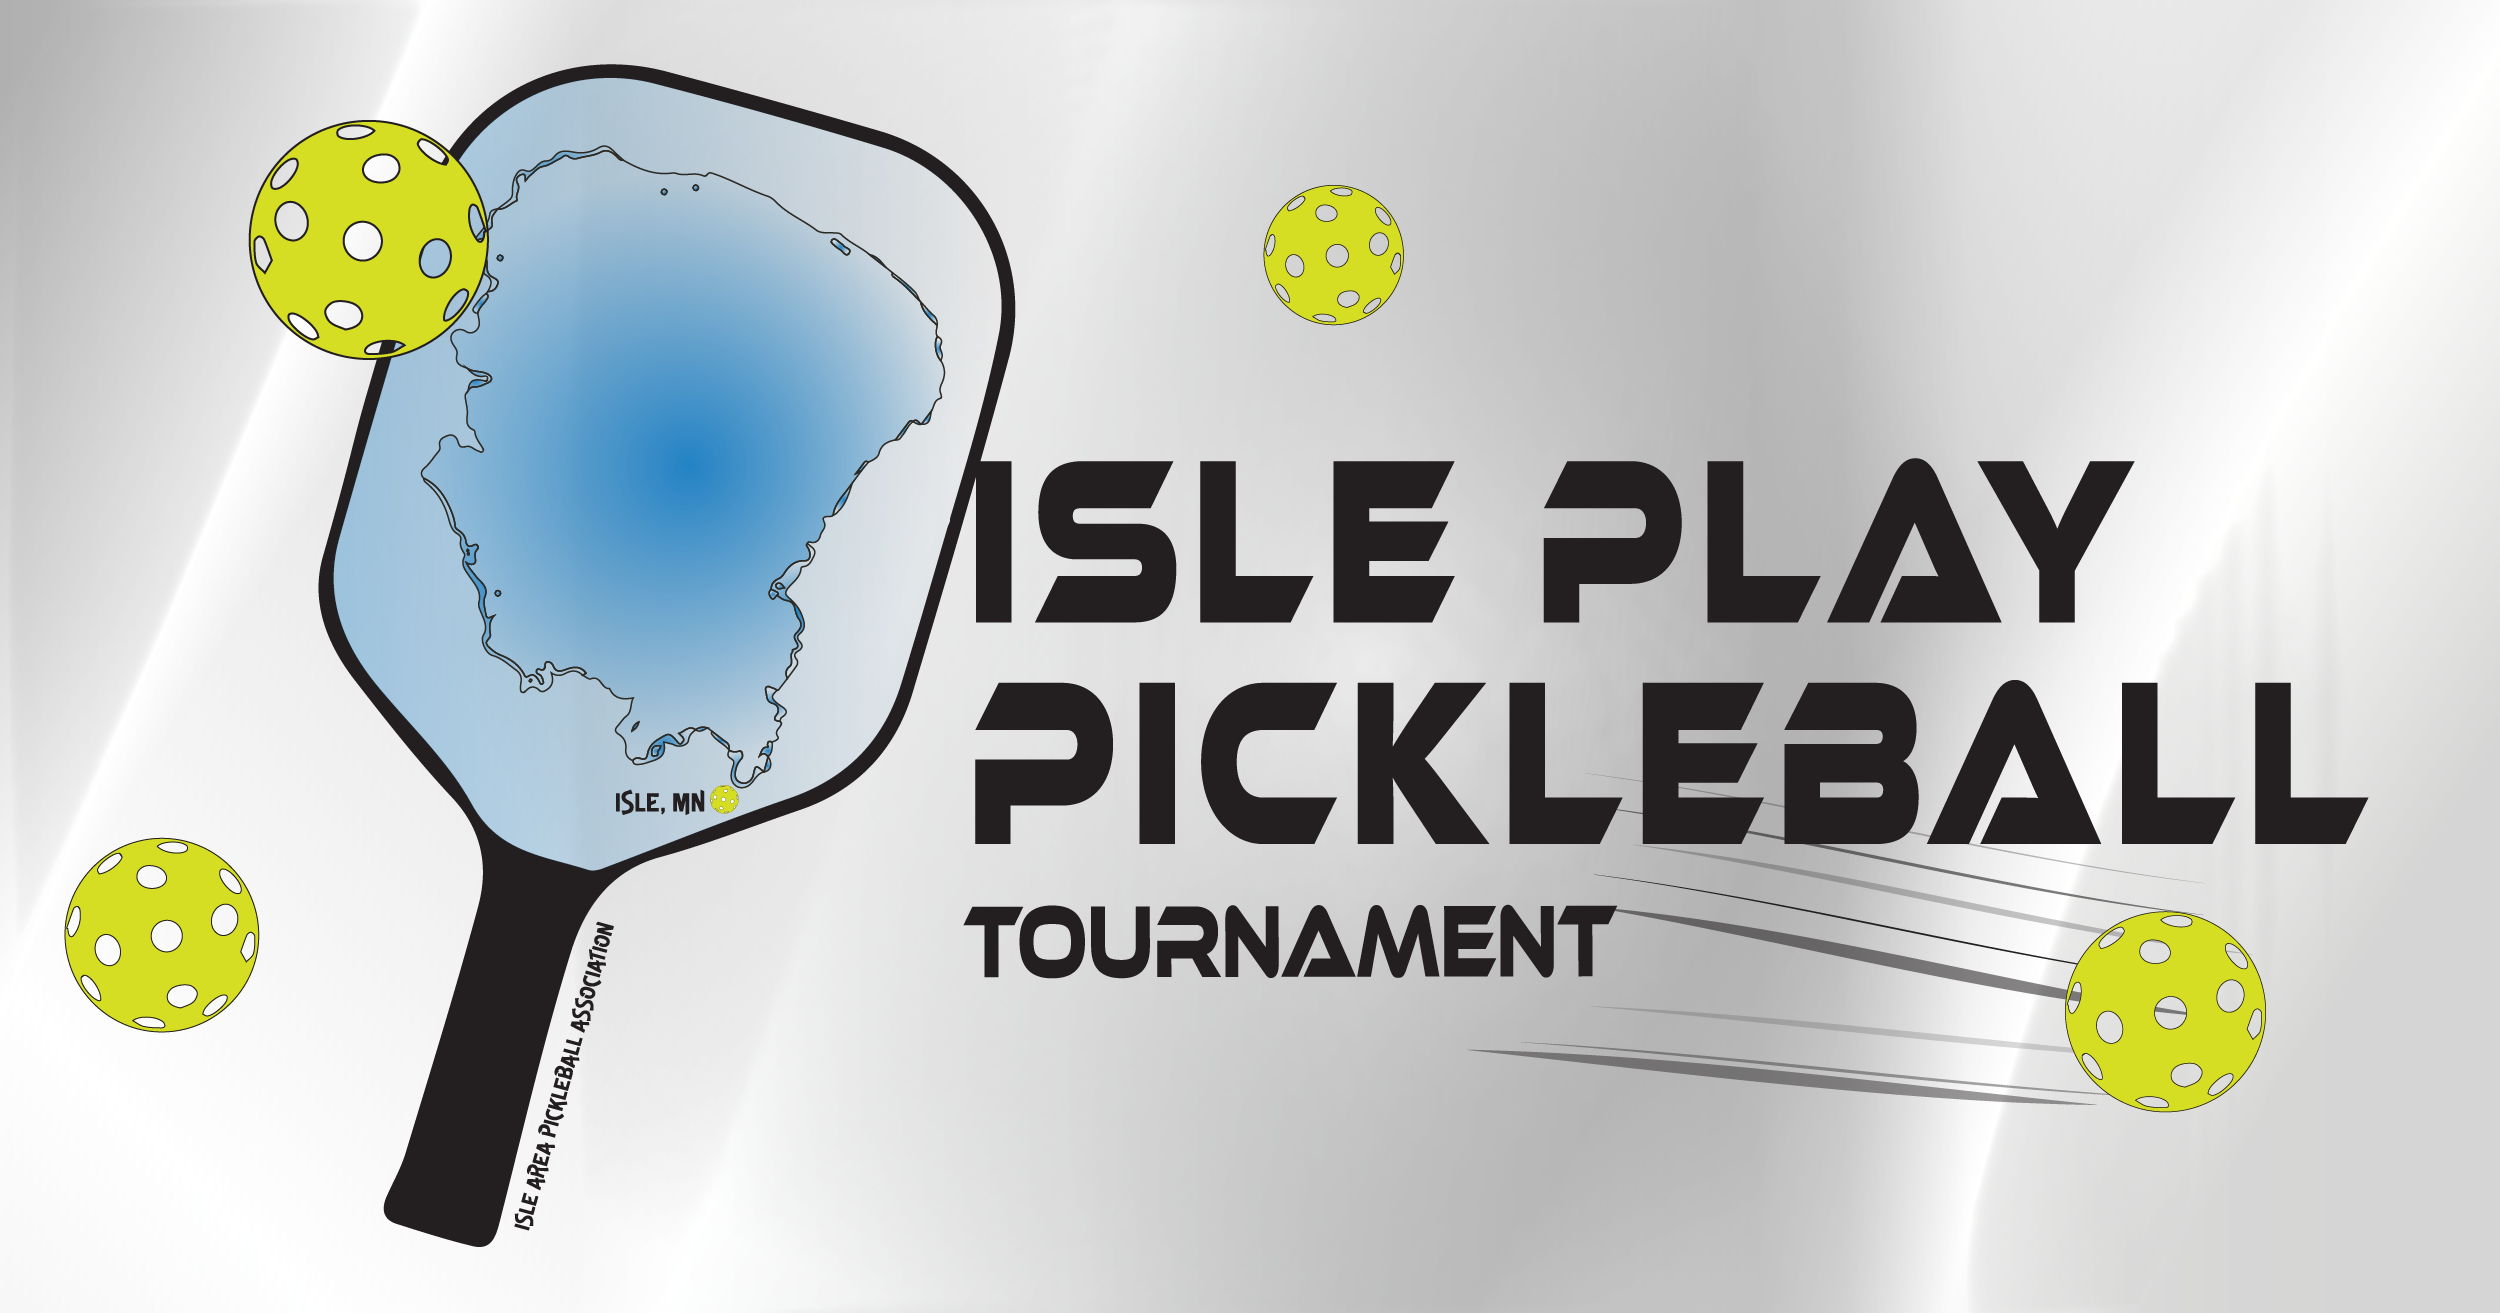 Isle Play Pickleball Tournament Logo Horizontal